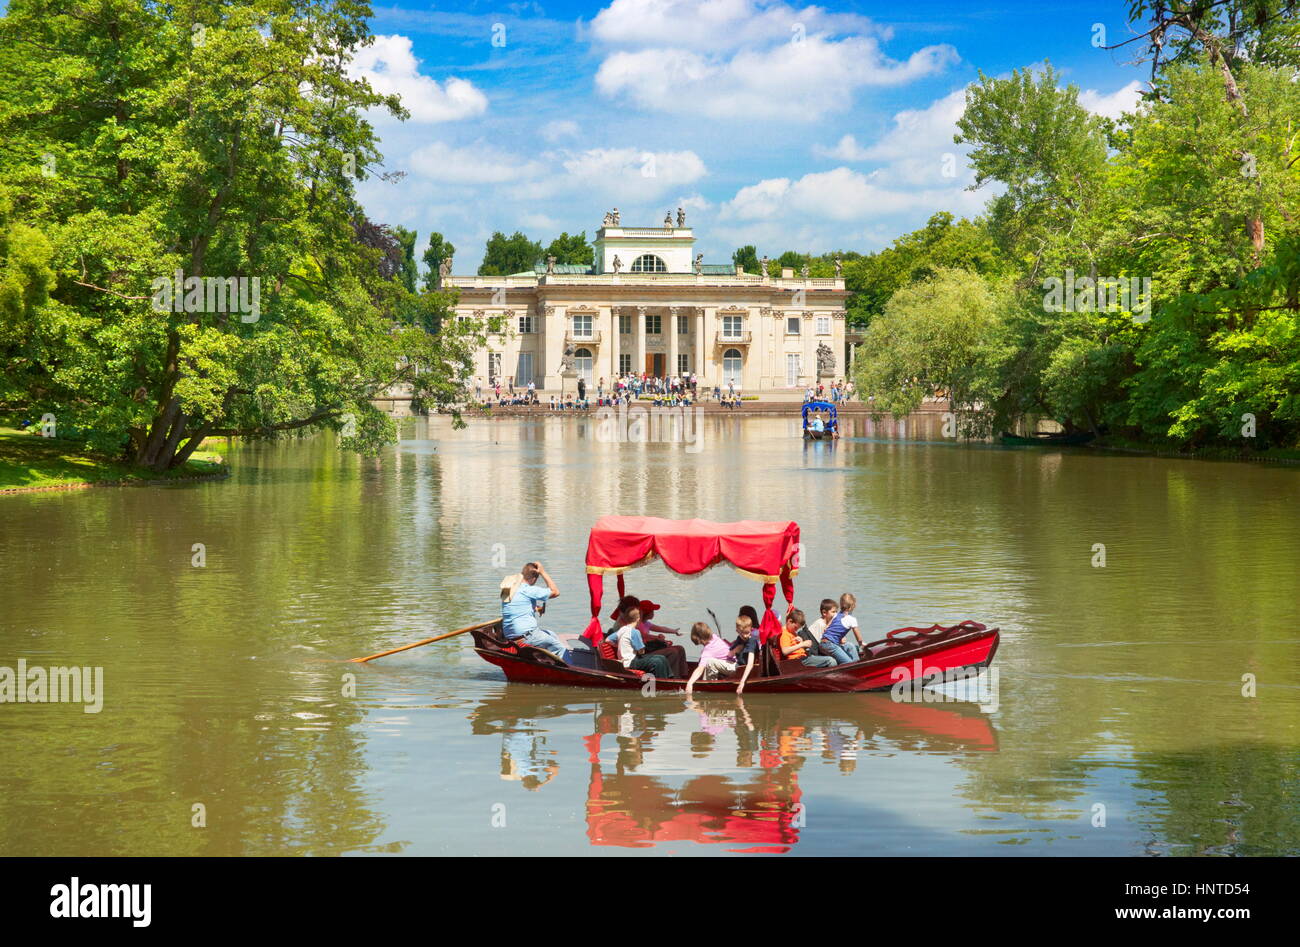 Gondola on the lake, Lazienki Royal Palace, Warsaw, Poland Stock Photo